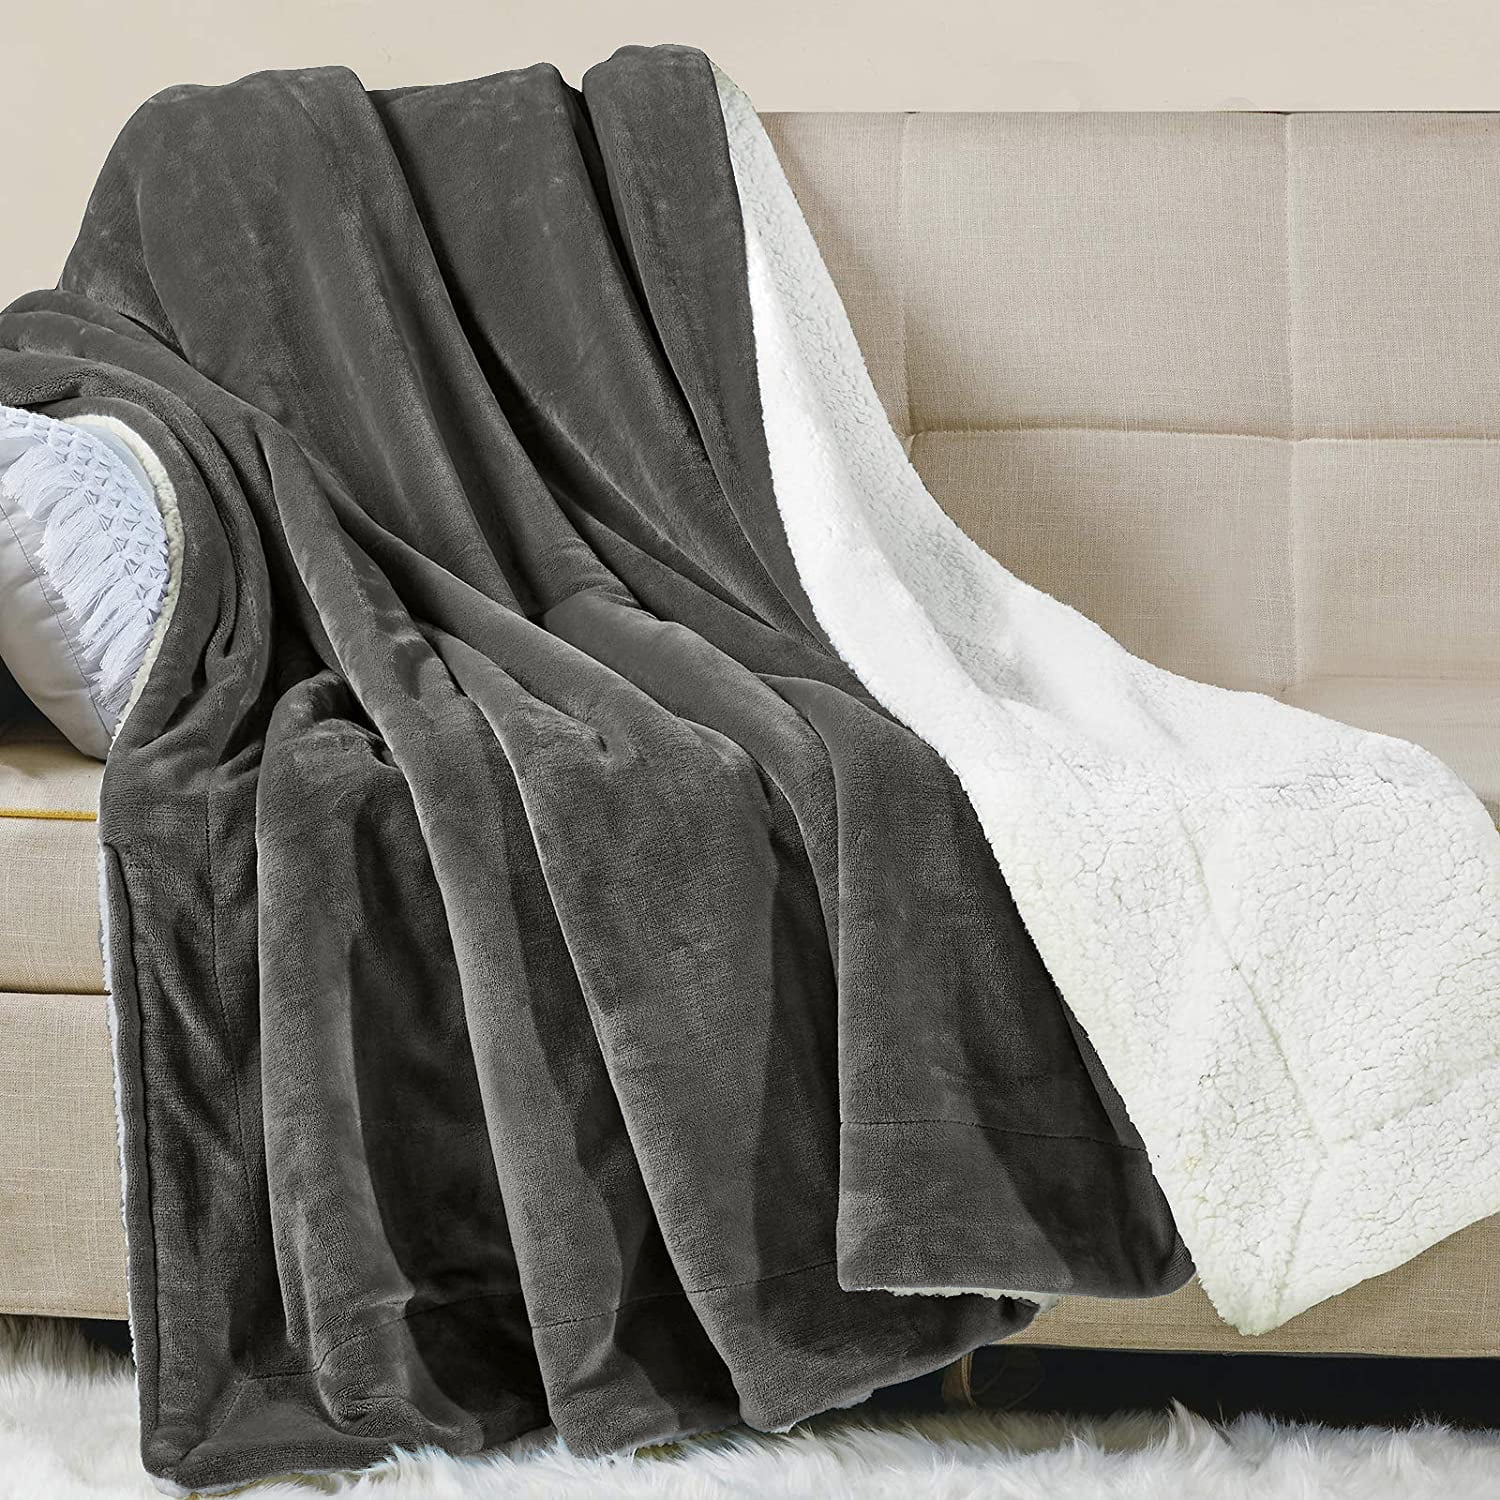 Cozy Blanket Throws Huge Soft Fuzzy Sherpa Fleece Plush Reversible Throw Blanket 